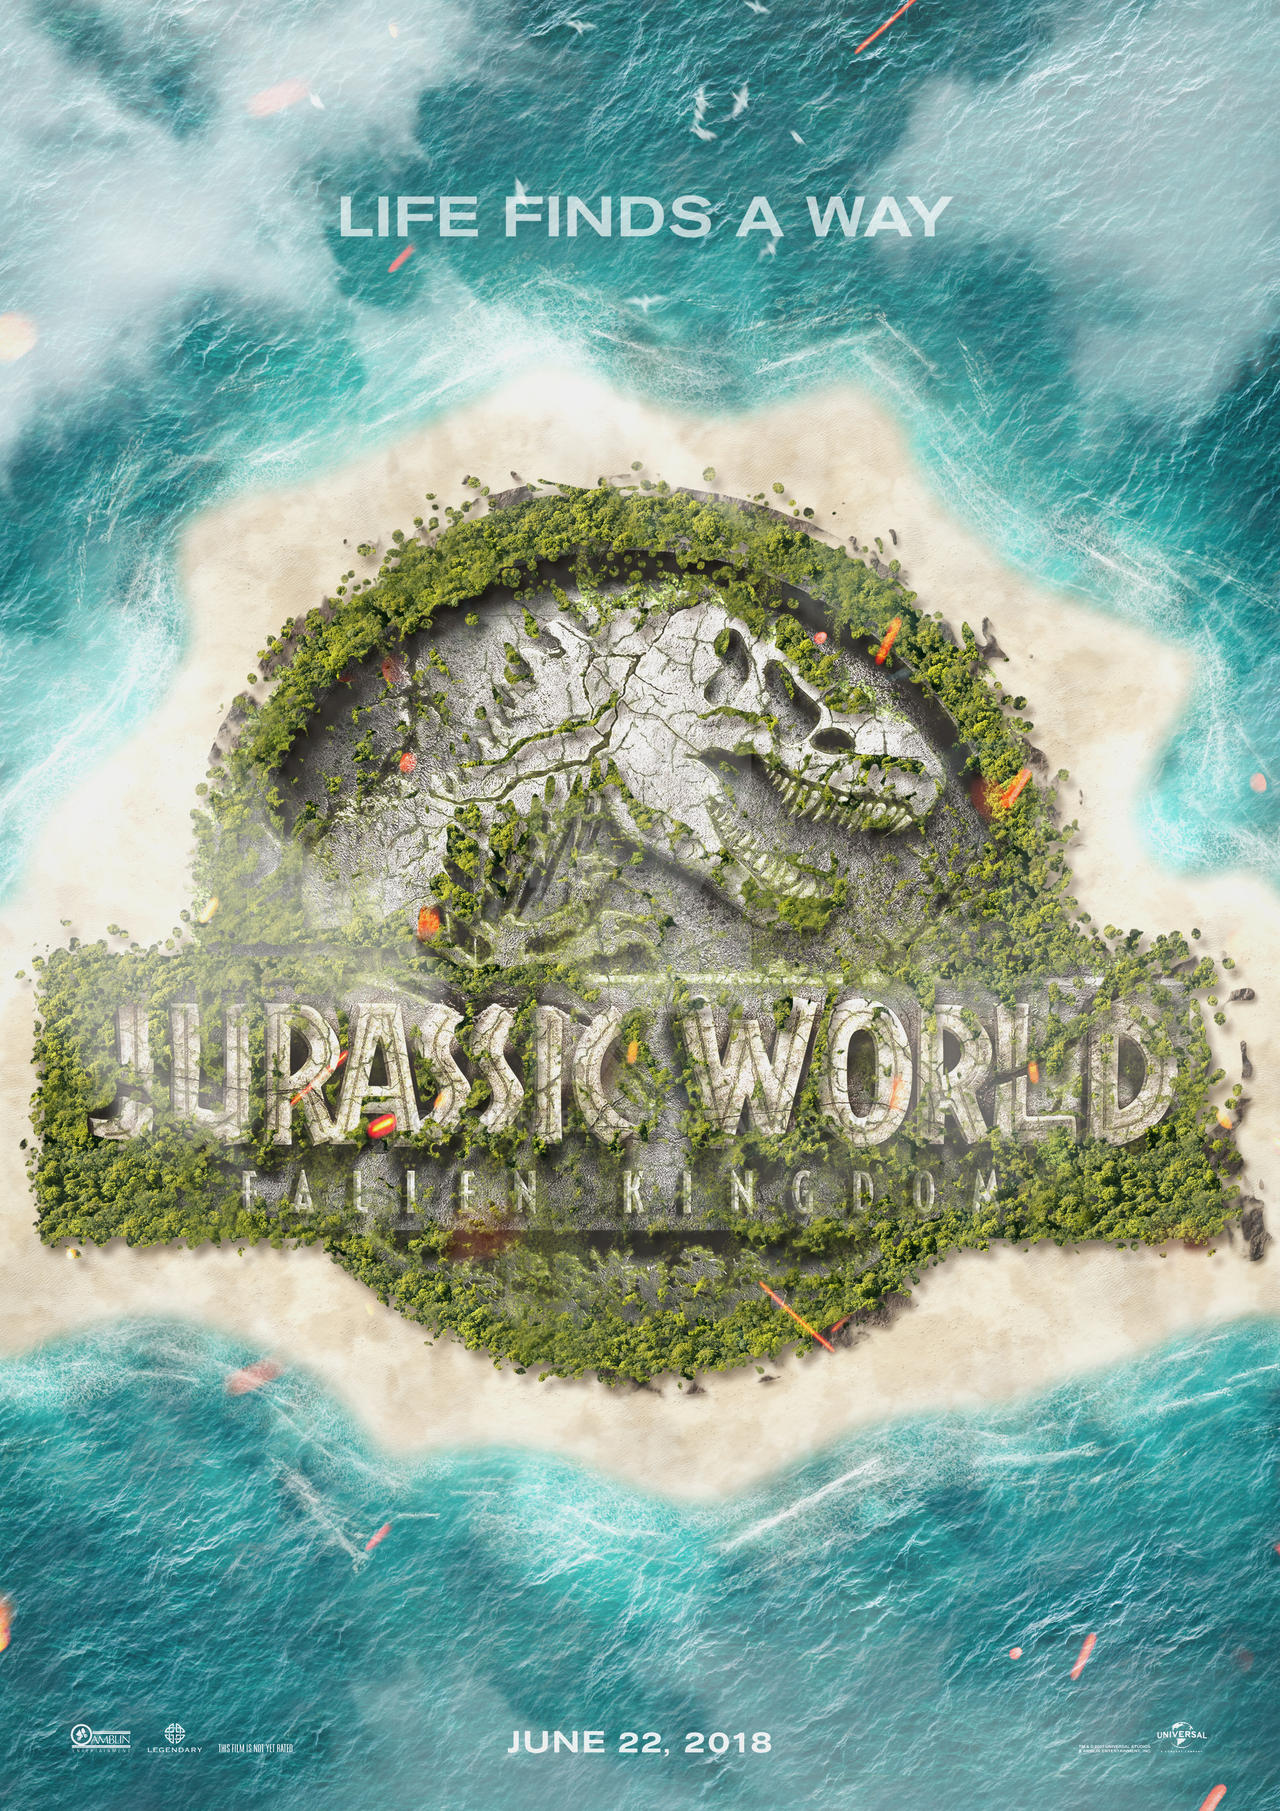 Jurassic World Fallen Kingdom 2018 Movie Poster Wallpapers